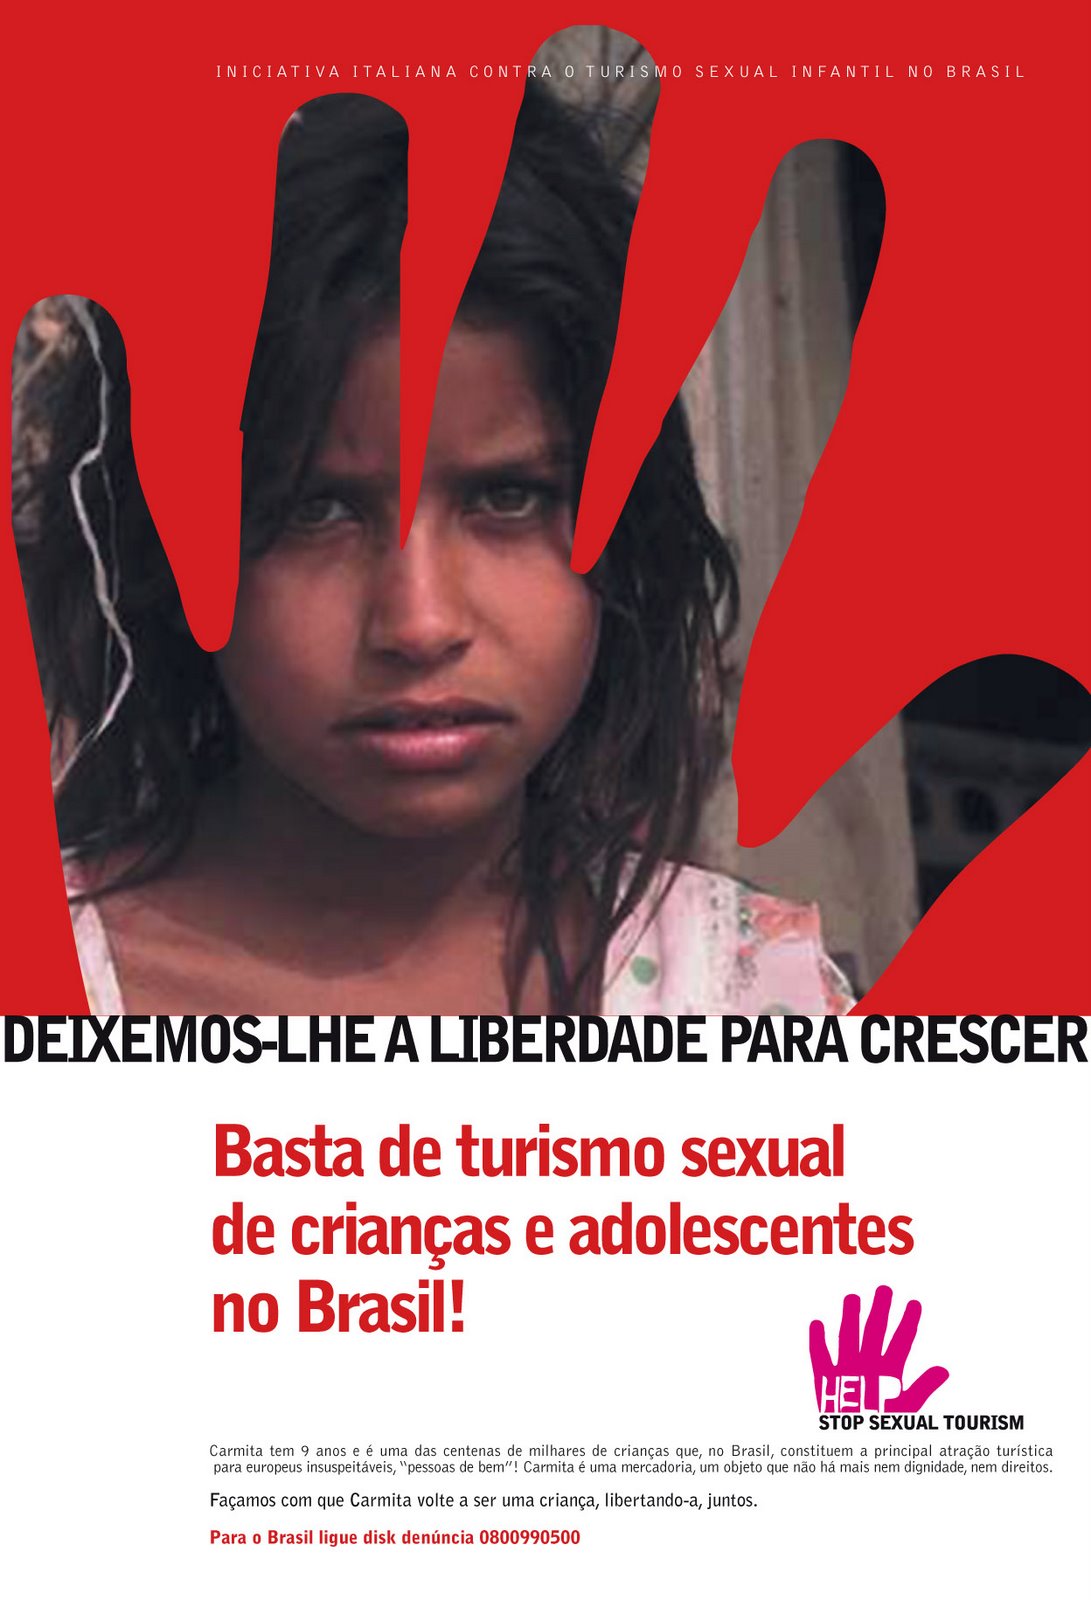 [prostituiÃ§Ã£o_campagna brasilianproa.jpg]